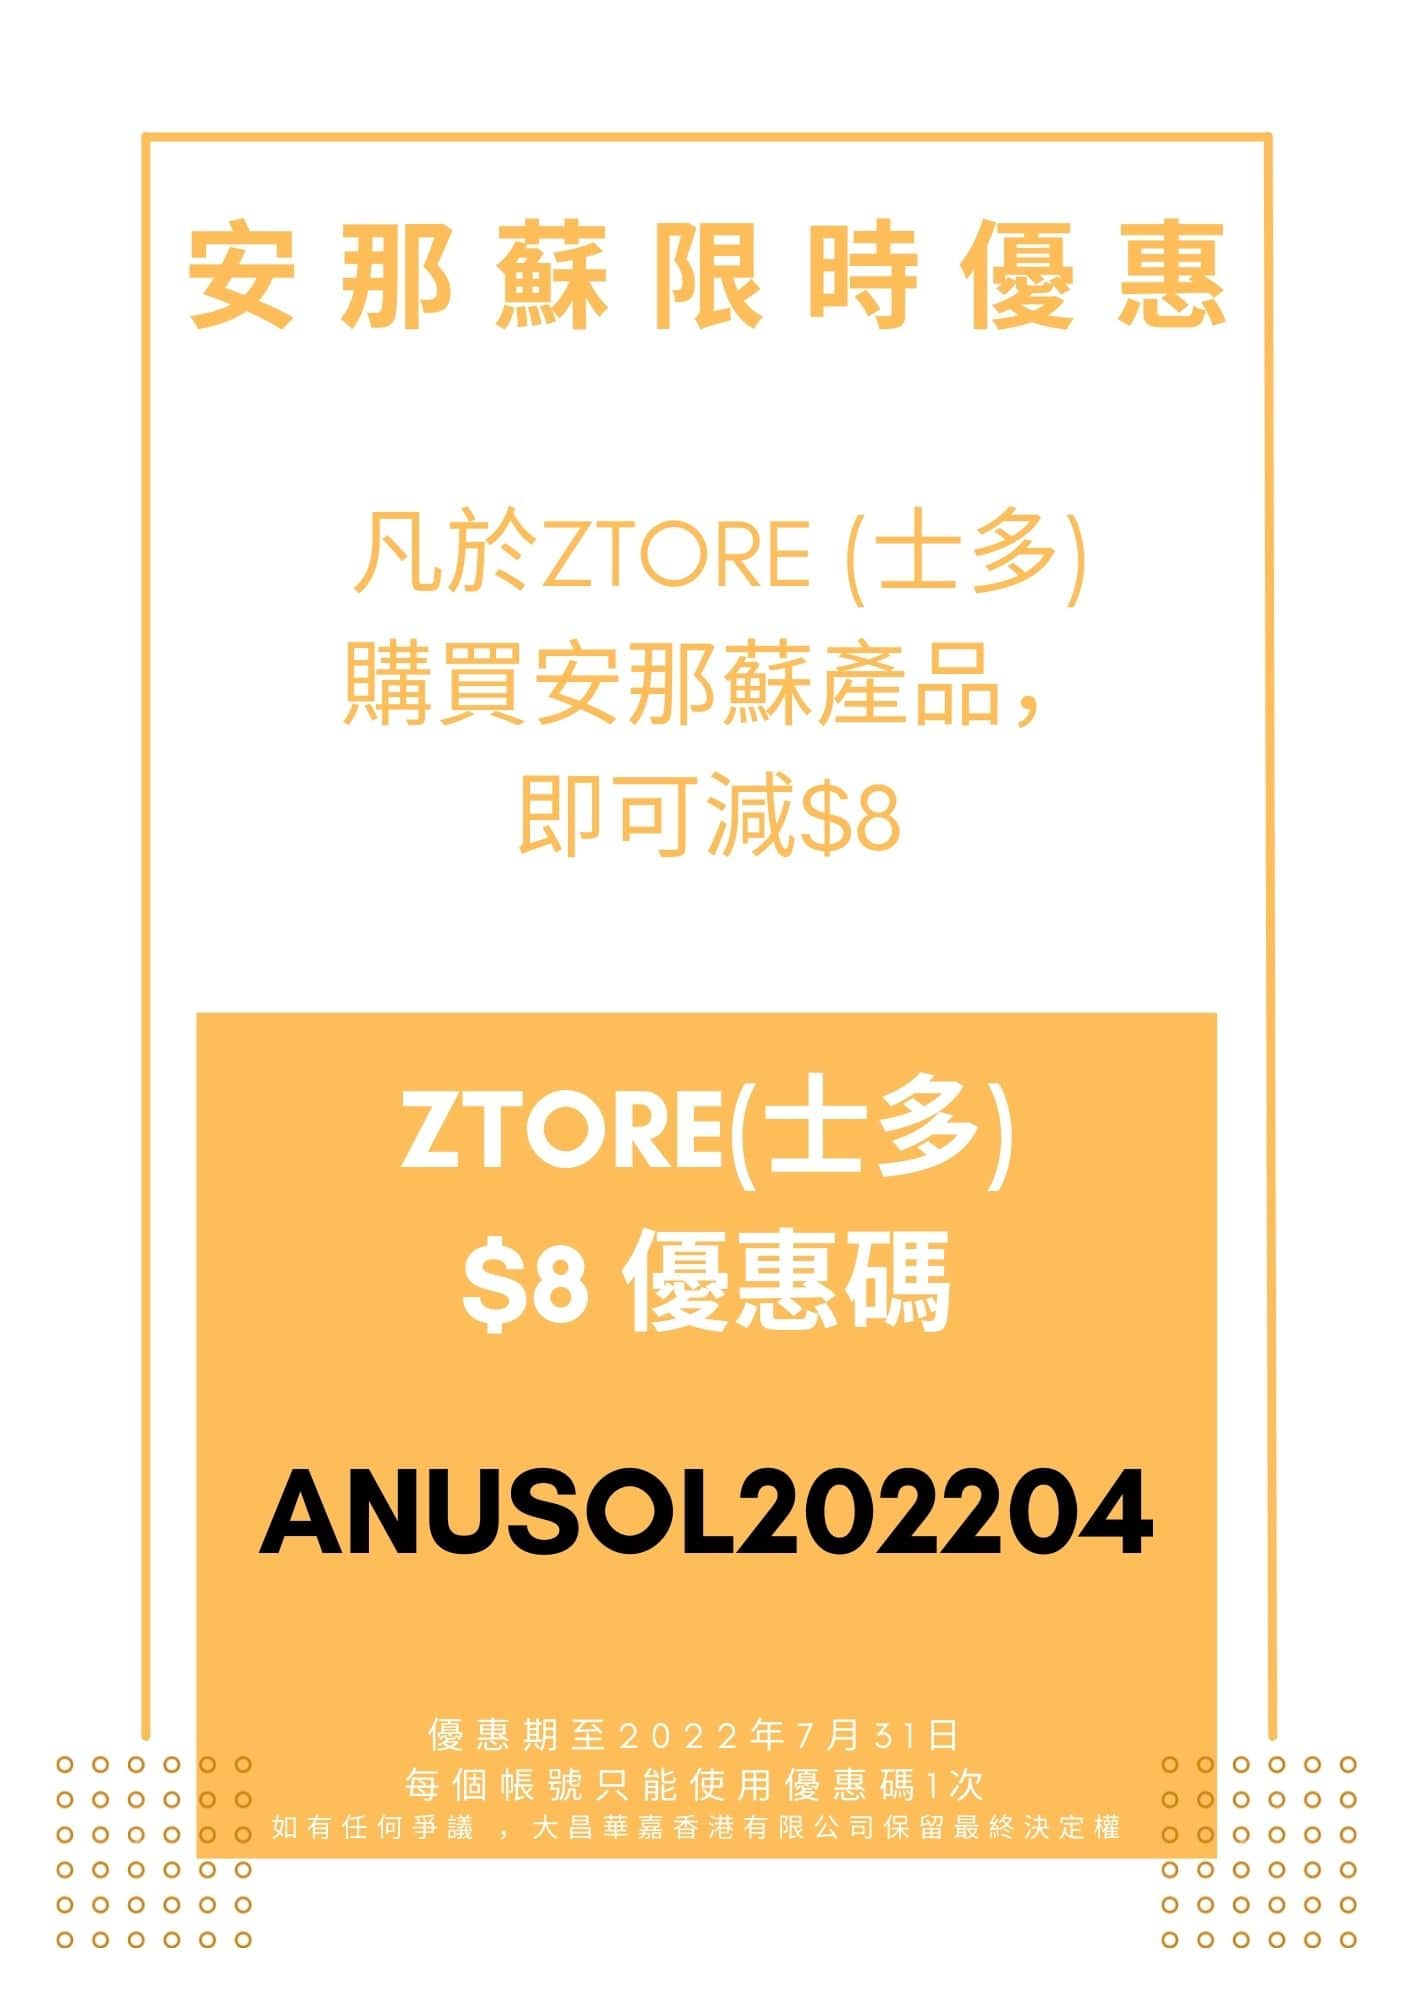 ztore-安那蘇-coupon